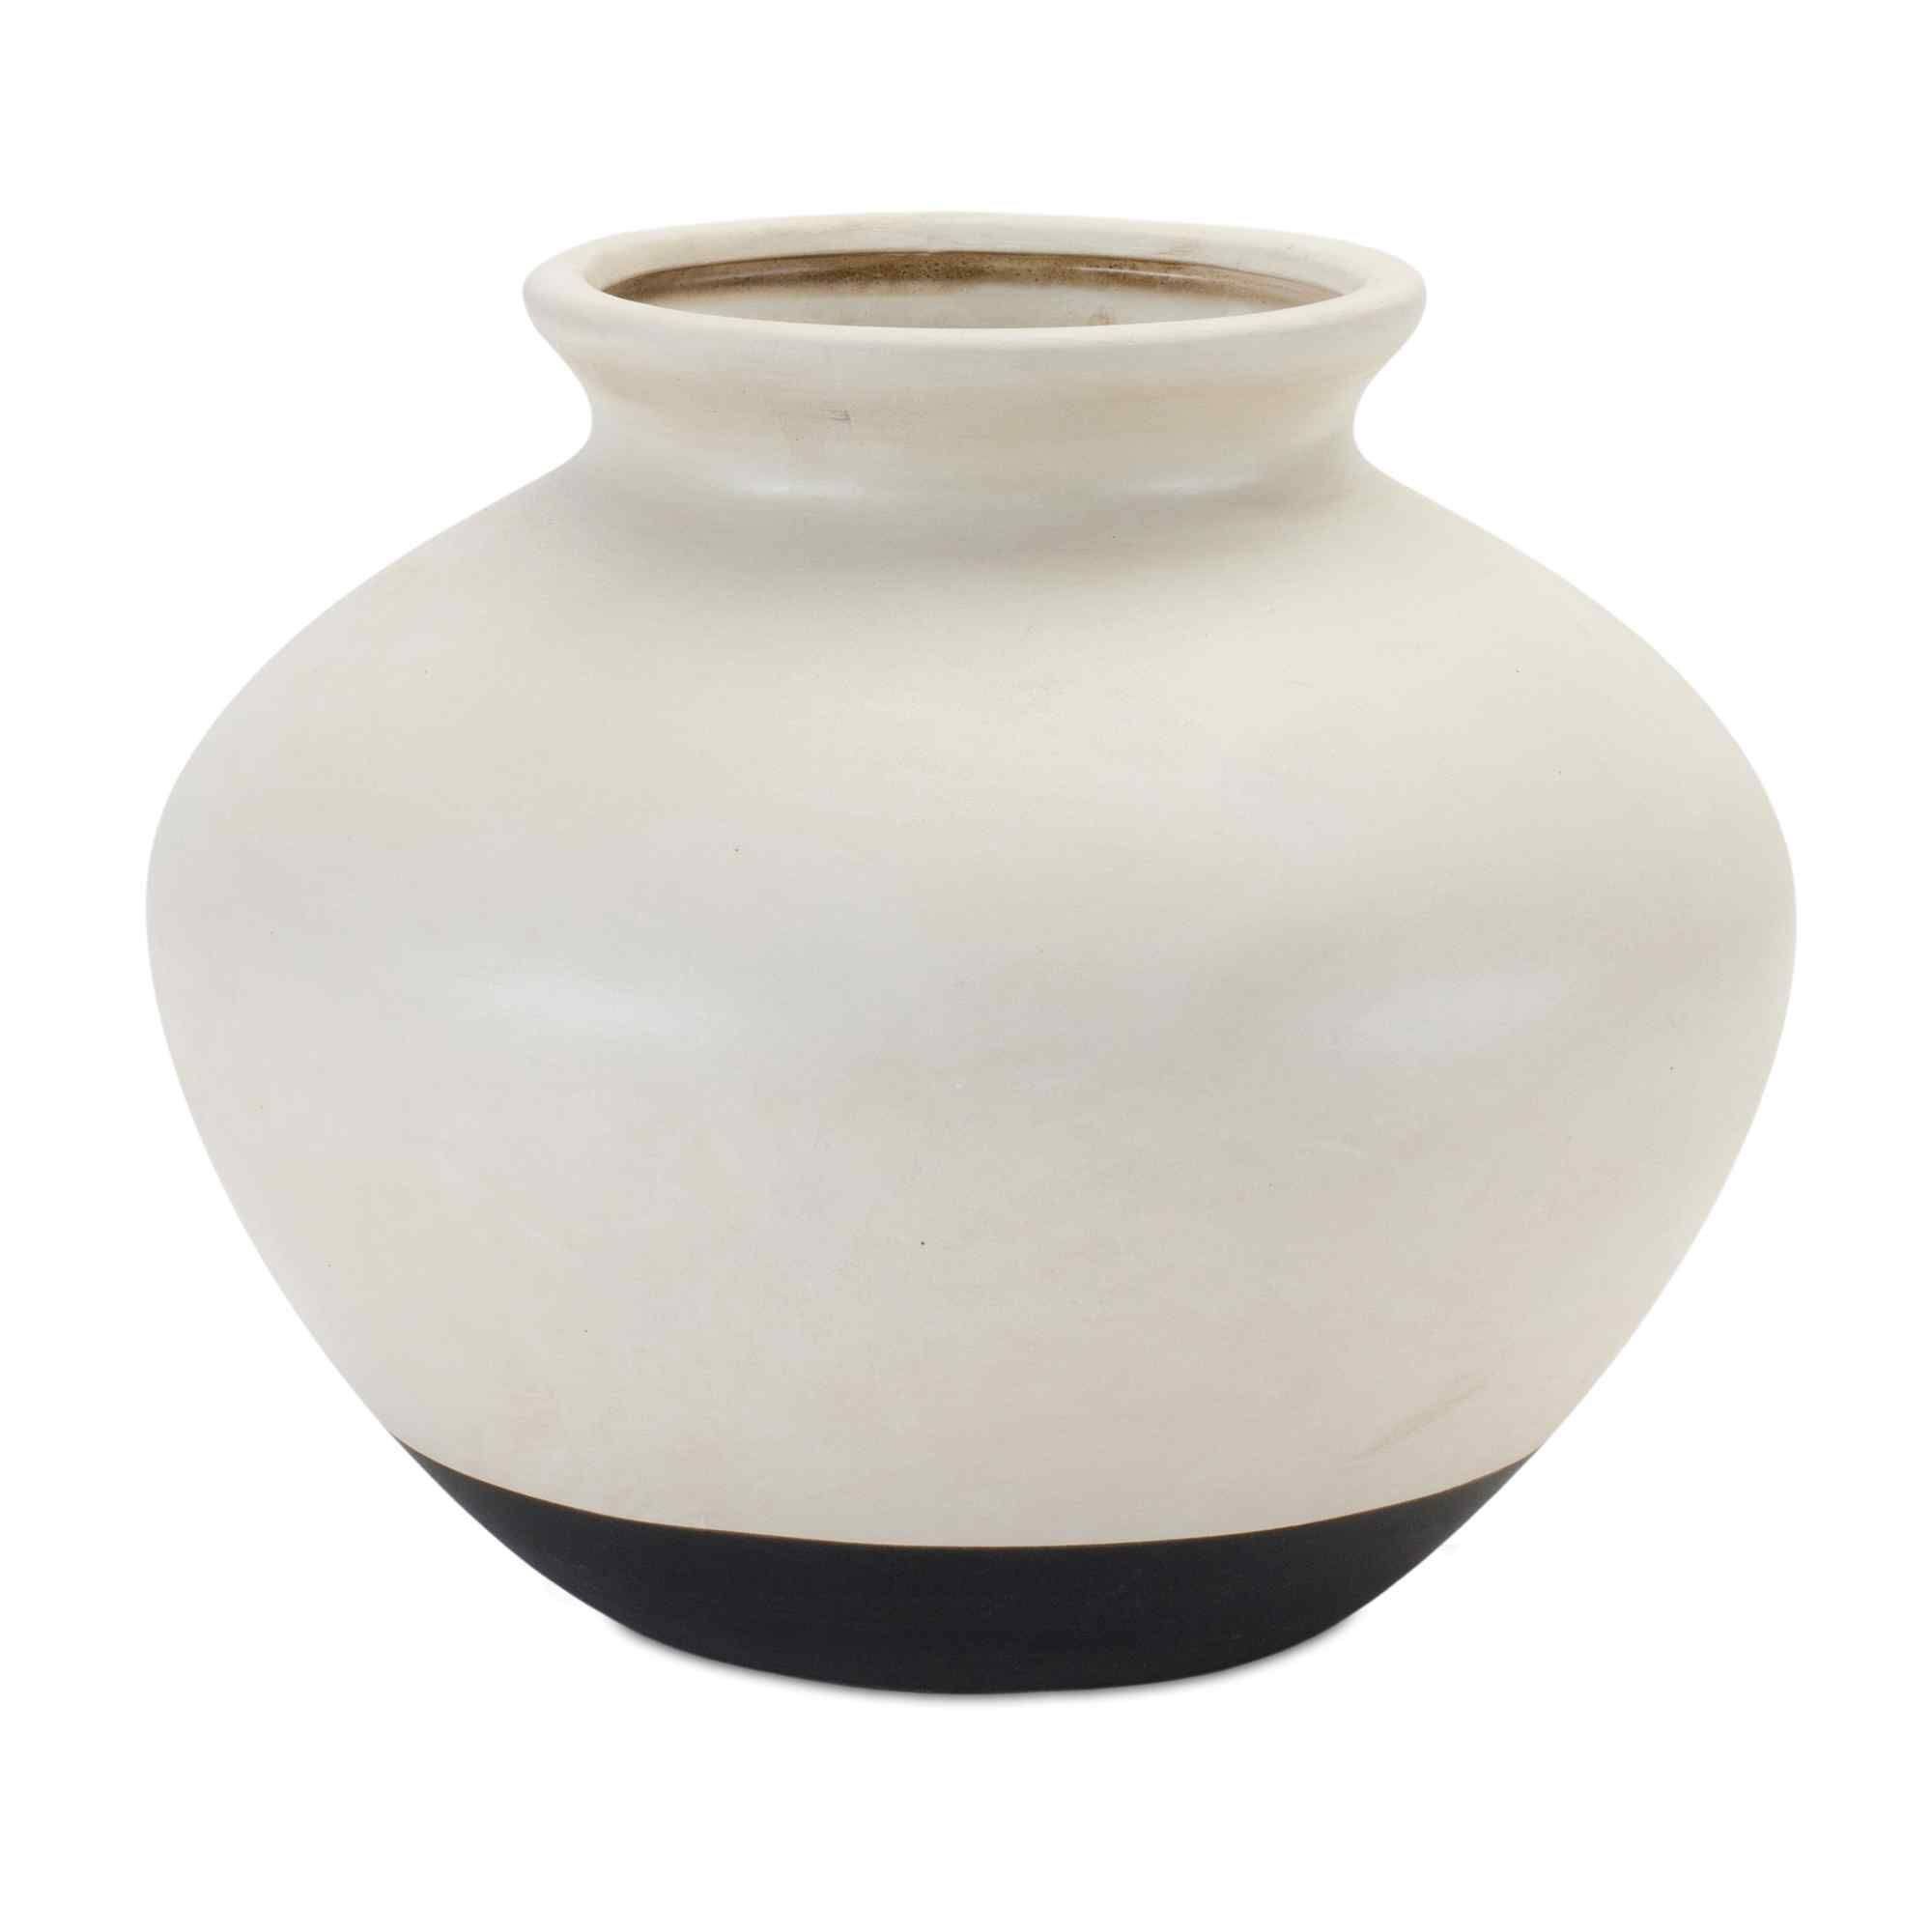 9" White and Black Urn Shaped Ceramic Vase